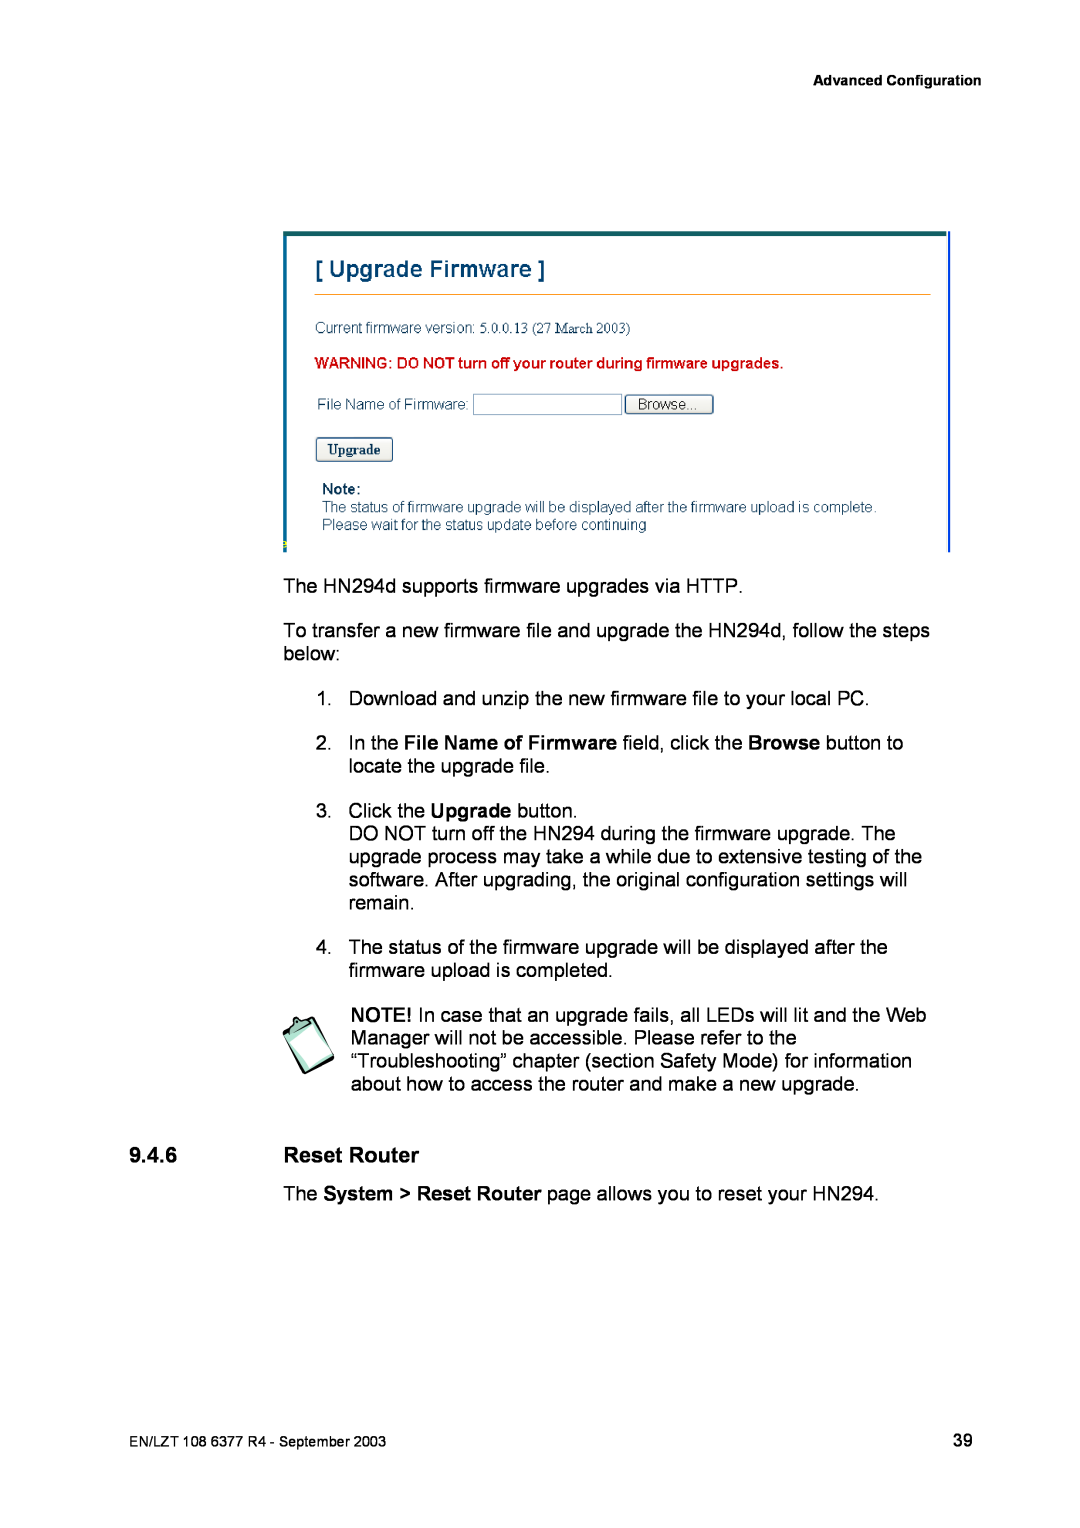 Garmin HN294DP/DI manual Reset Router 